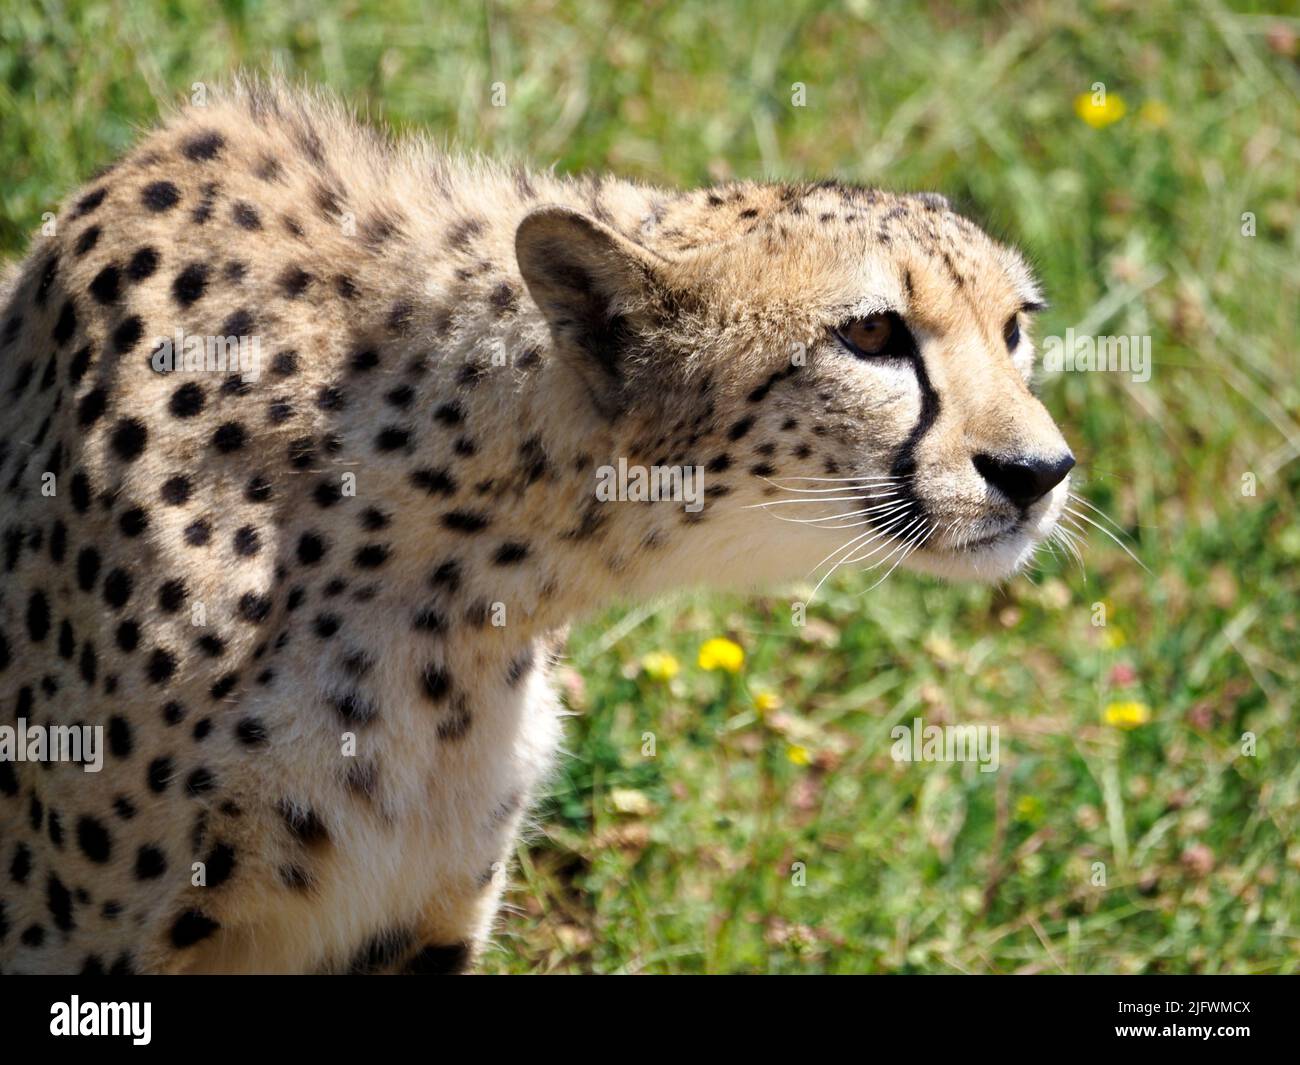 Portrait of African Cheetah (Acinonyx jubatus) seen from profile Stock Photo